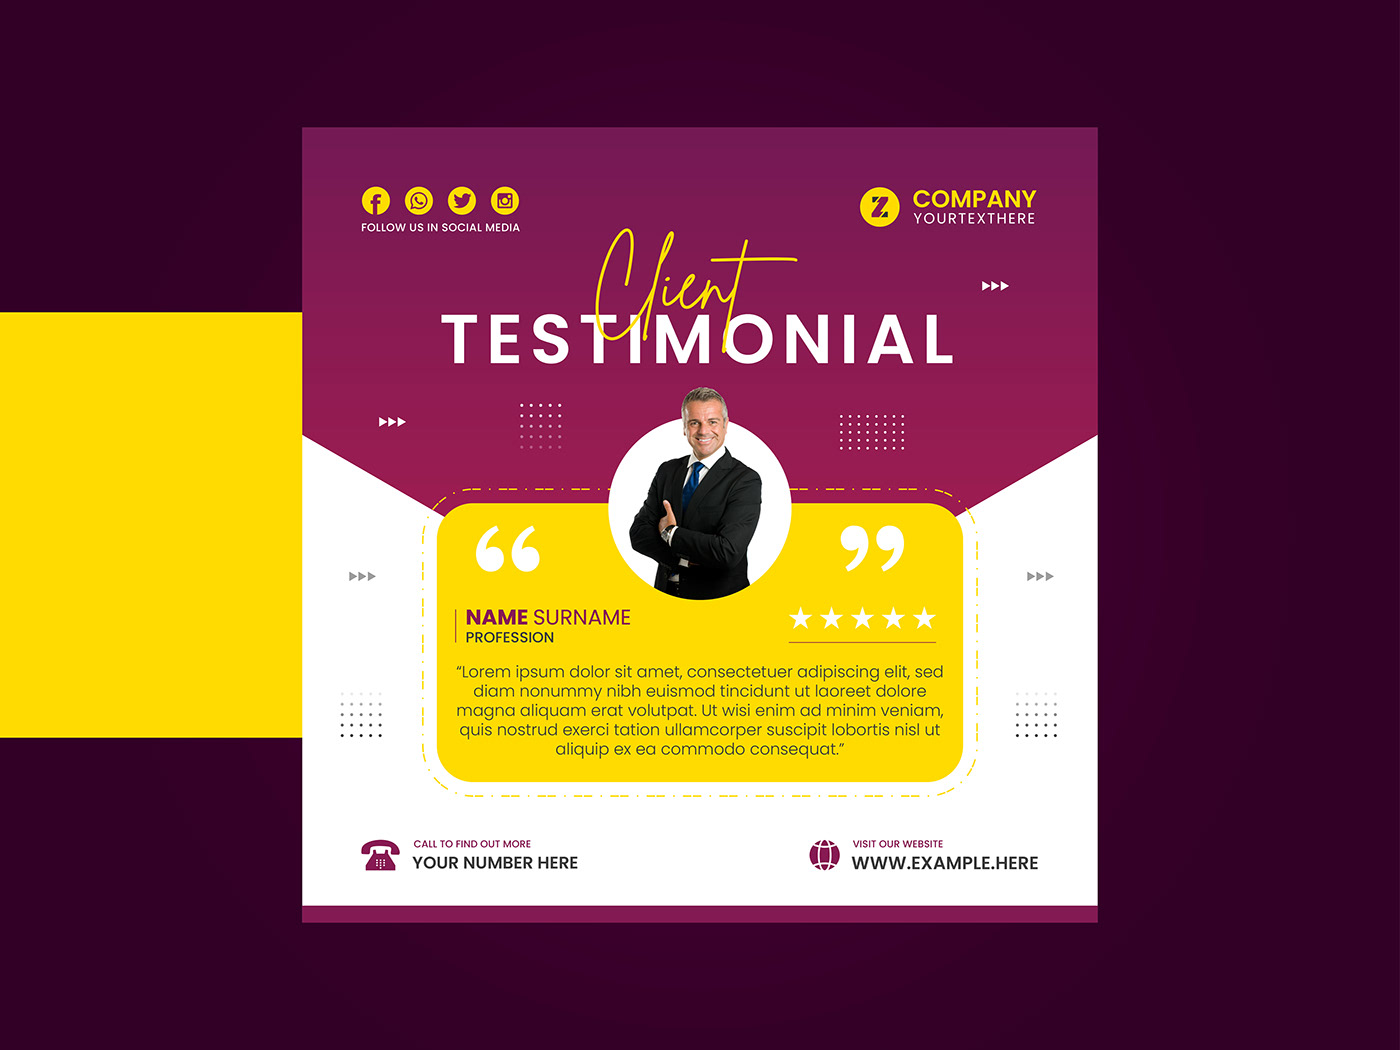 Customer review client testimonial social media post web banner Design